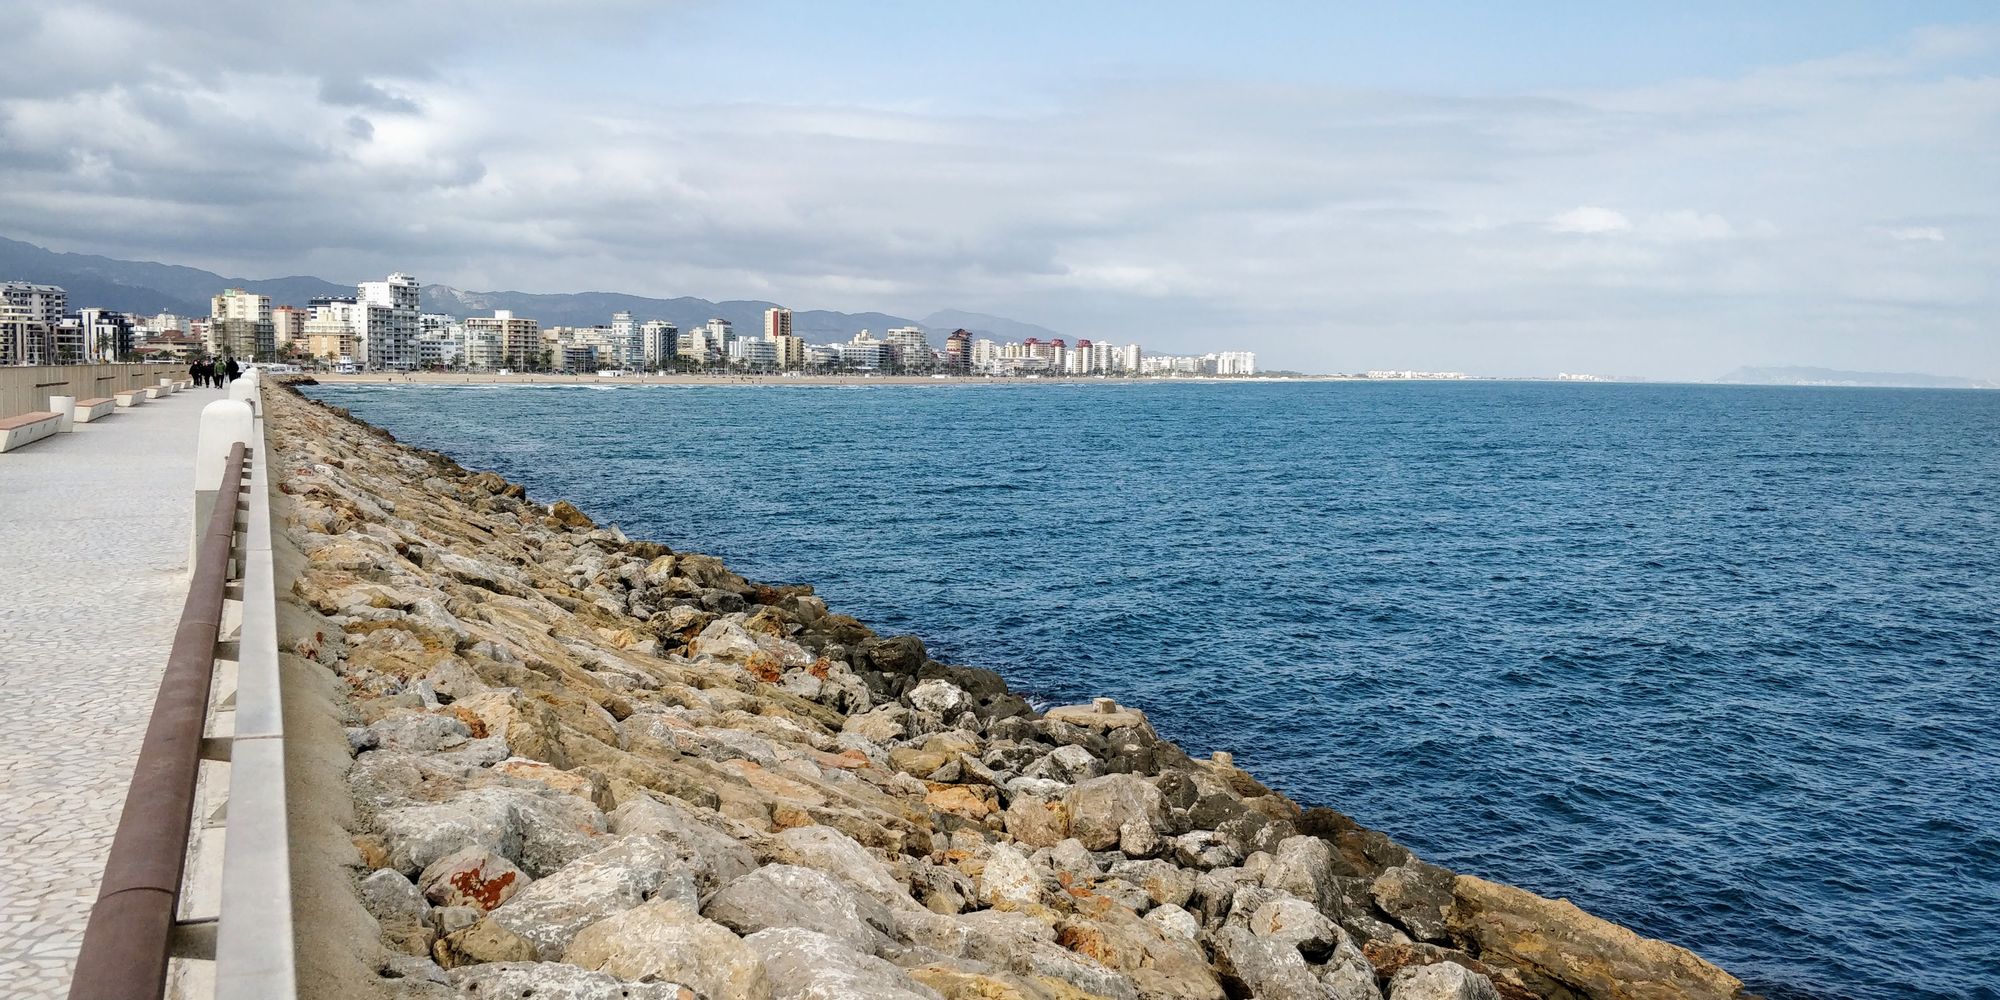 Gandia and Mollo de la Creu - Our First Contact With the Mediterranean Landscape (Mar 2021)